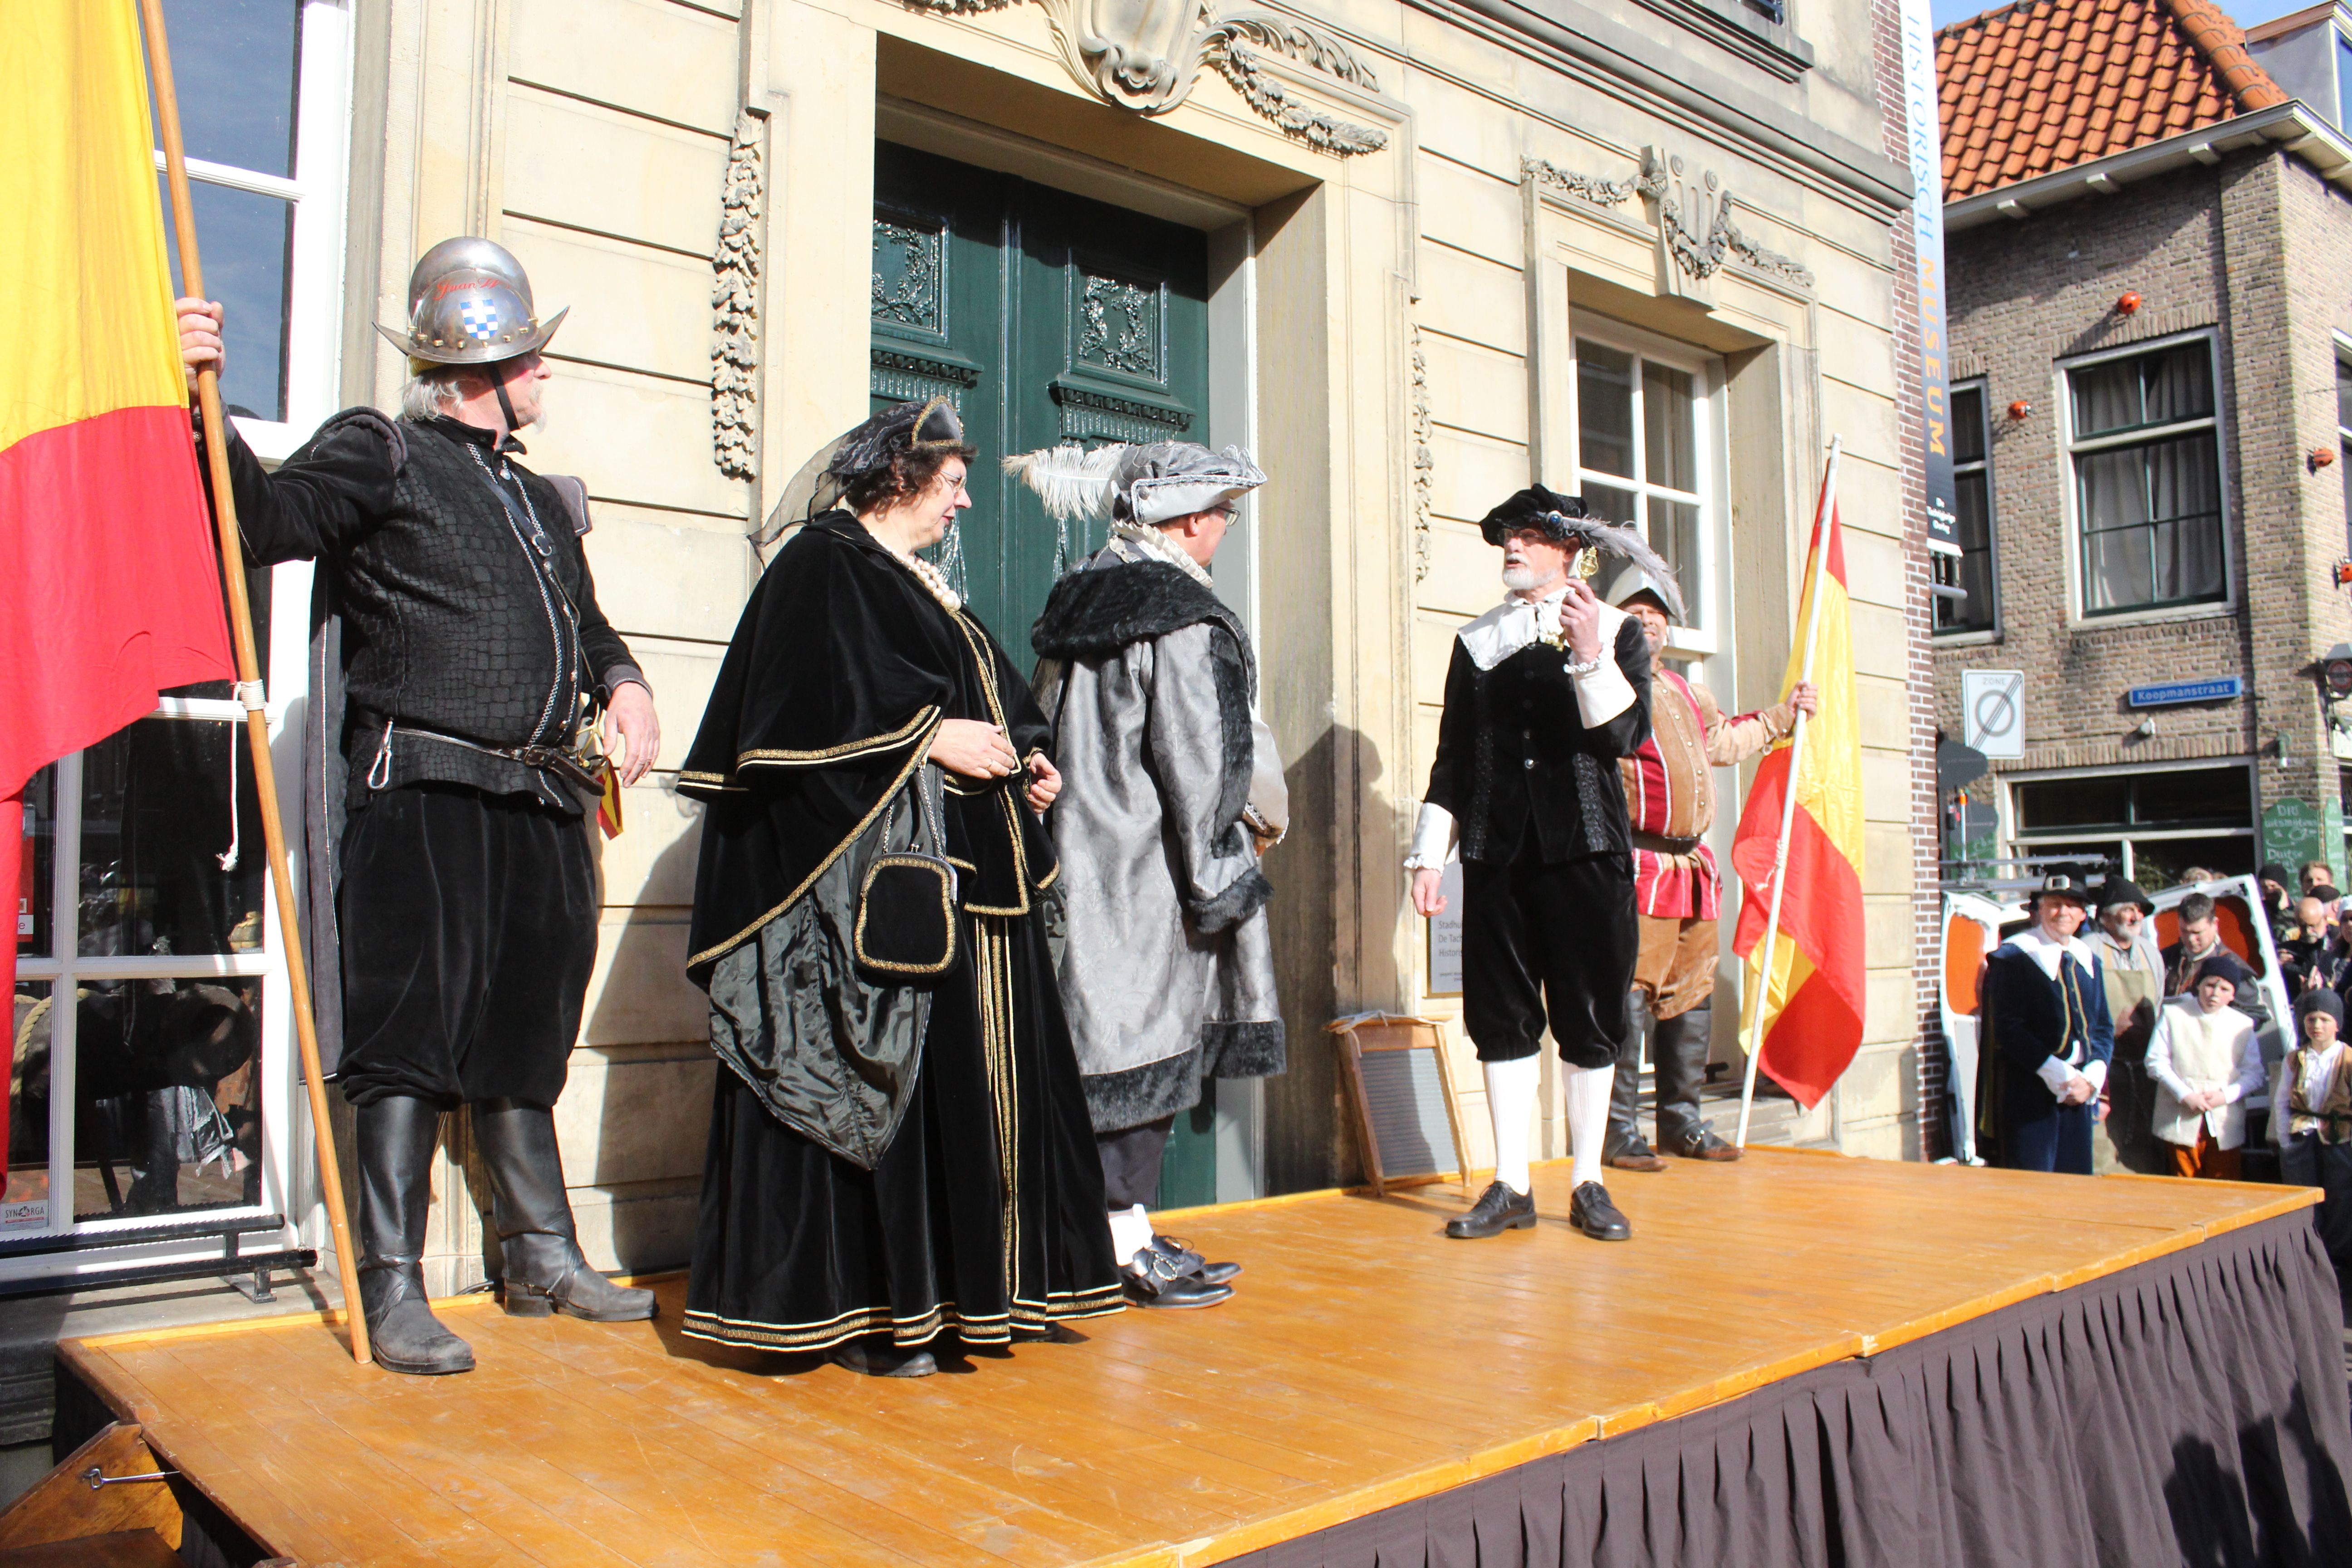 File:Het stadhuis als toneel spel om de sleutel 1 april feest Brielle.JPG - Wikimedia Commons